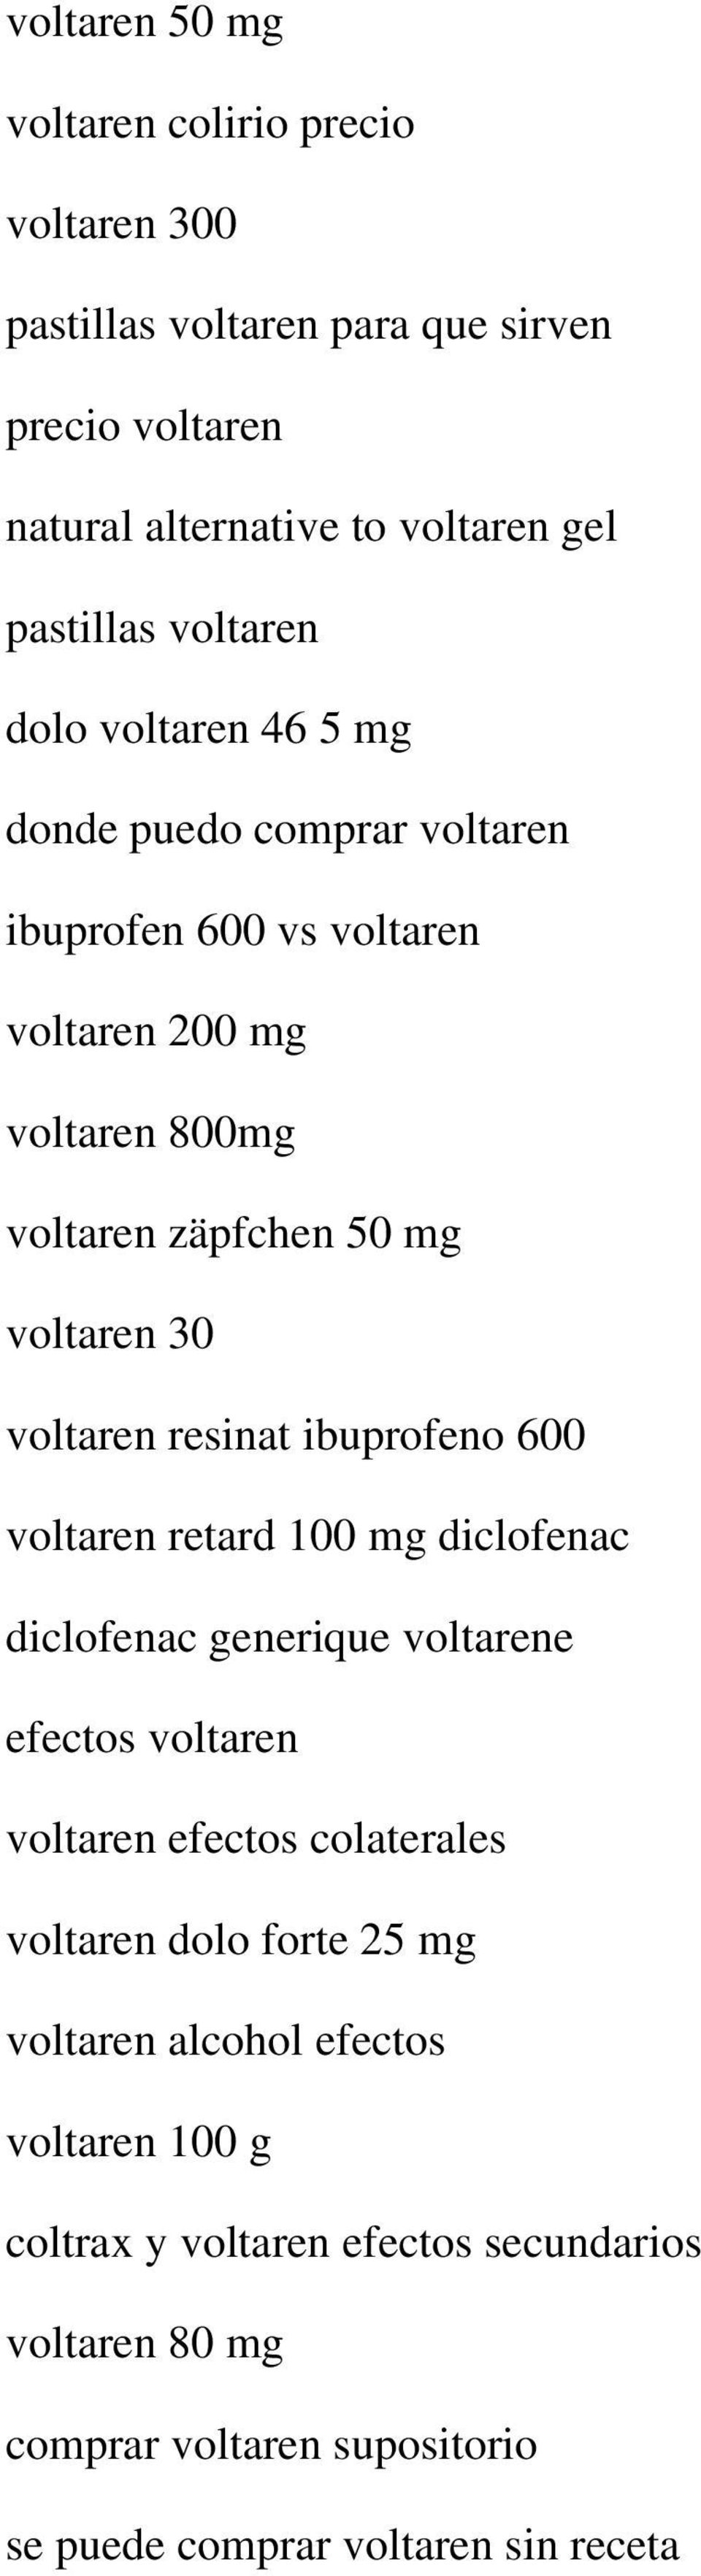 resinat ibuprofeno 600 voltaren retard 100 mg diclofenac diclofenac generique voltarene efectos voltaren voltaren efectos colaterales voltaren dolo forte 25